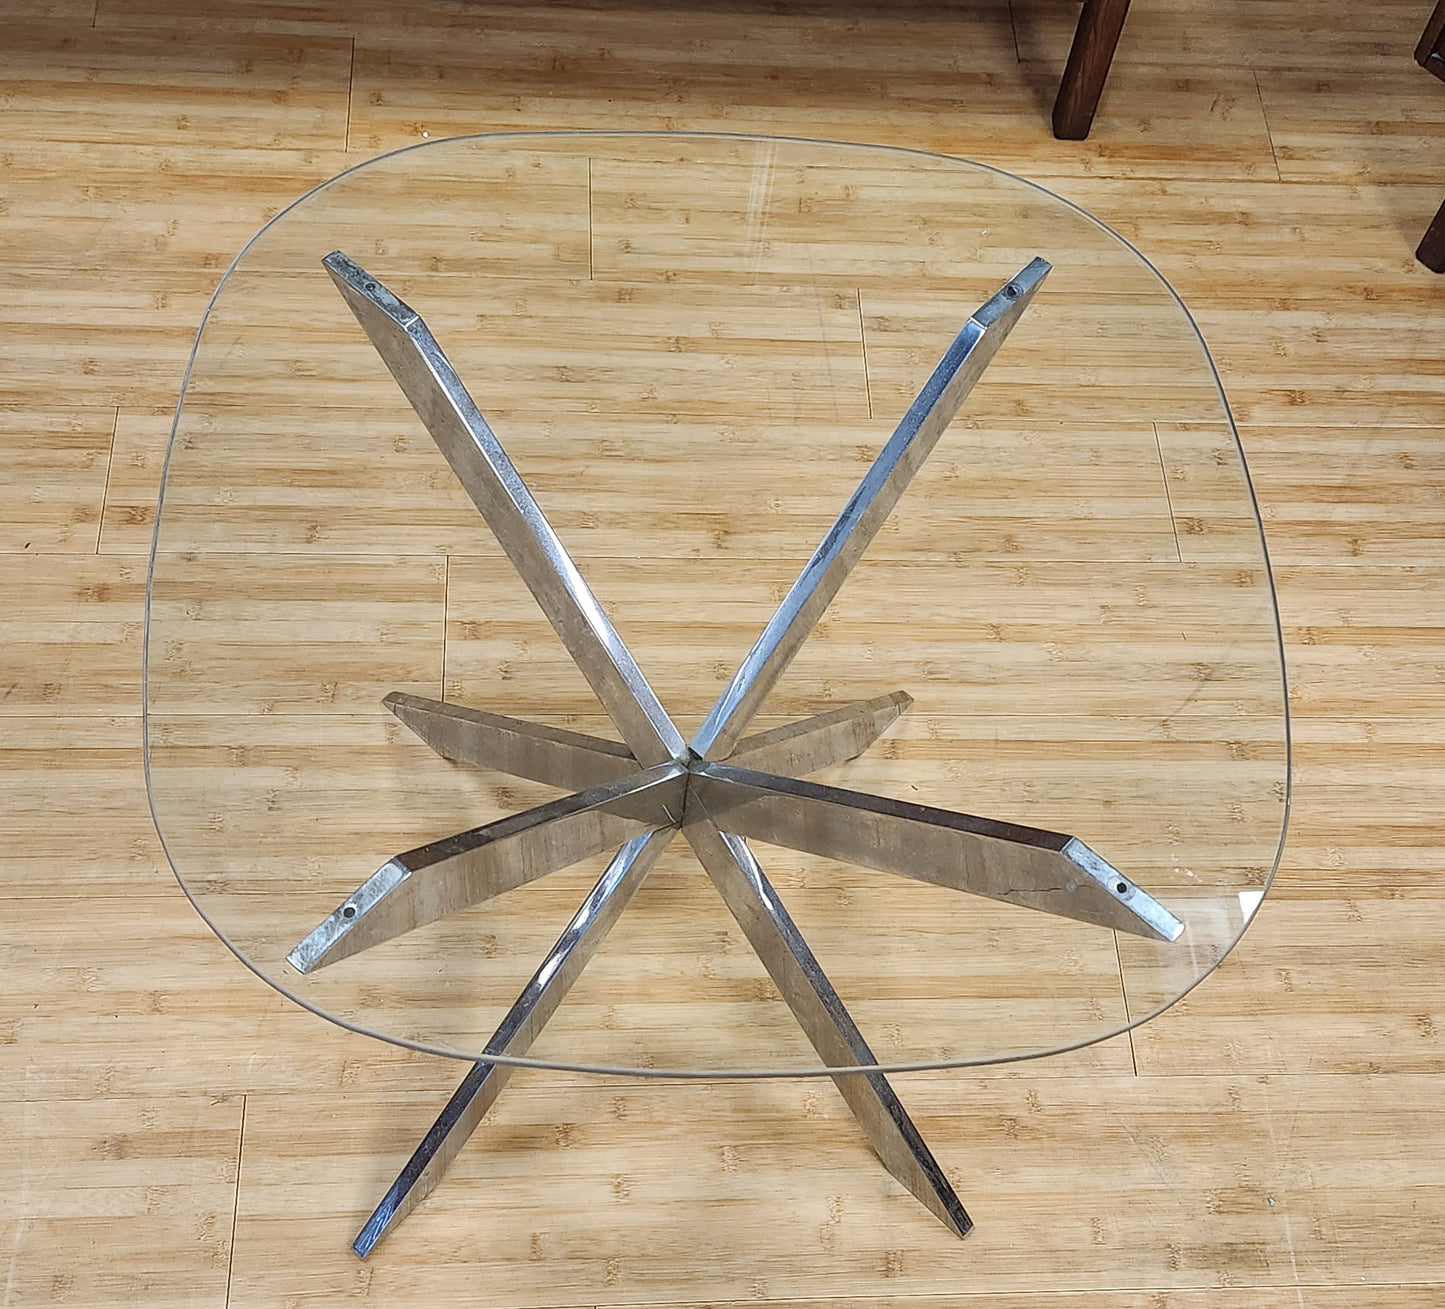 Modernist Len Rosen For Pace Collection Chrome & Glass Side Table